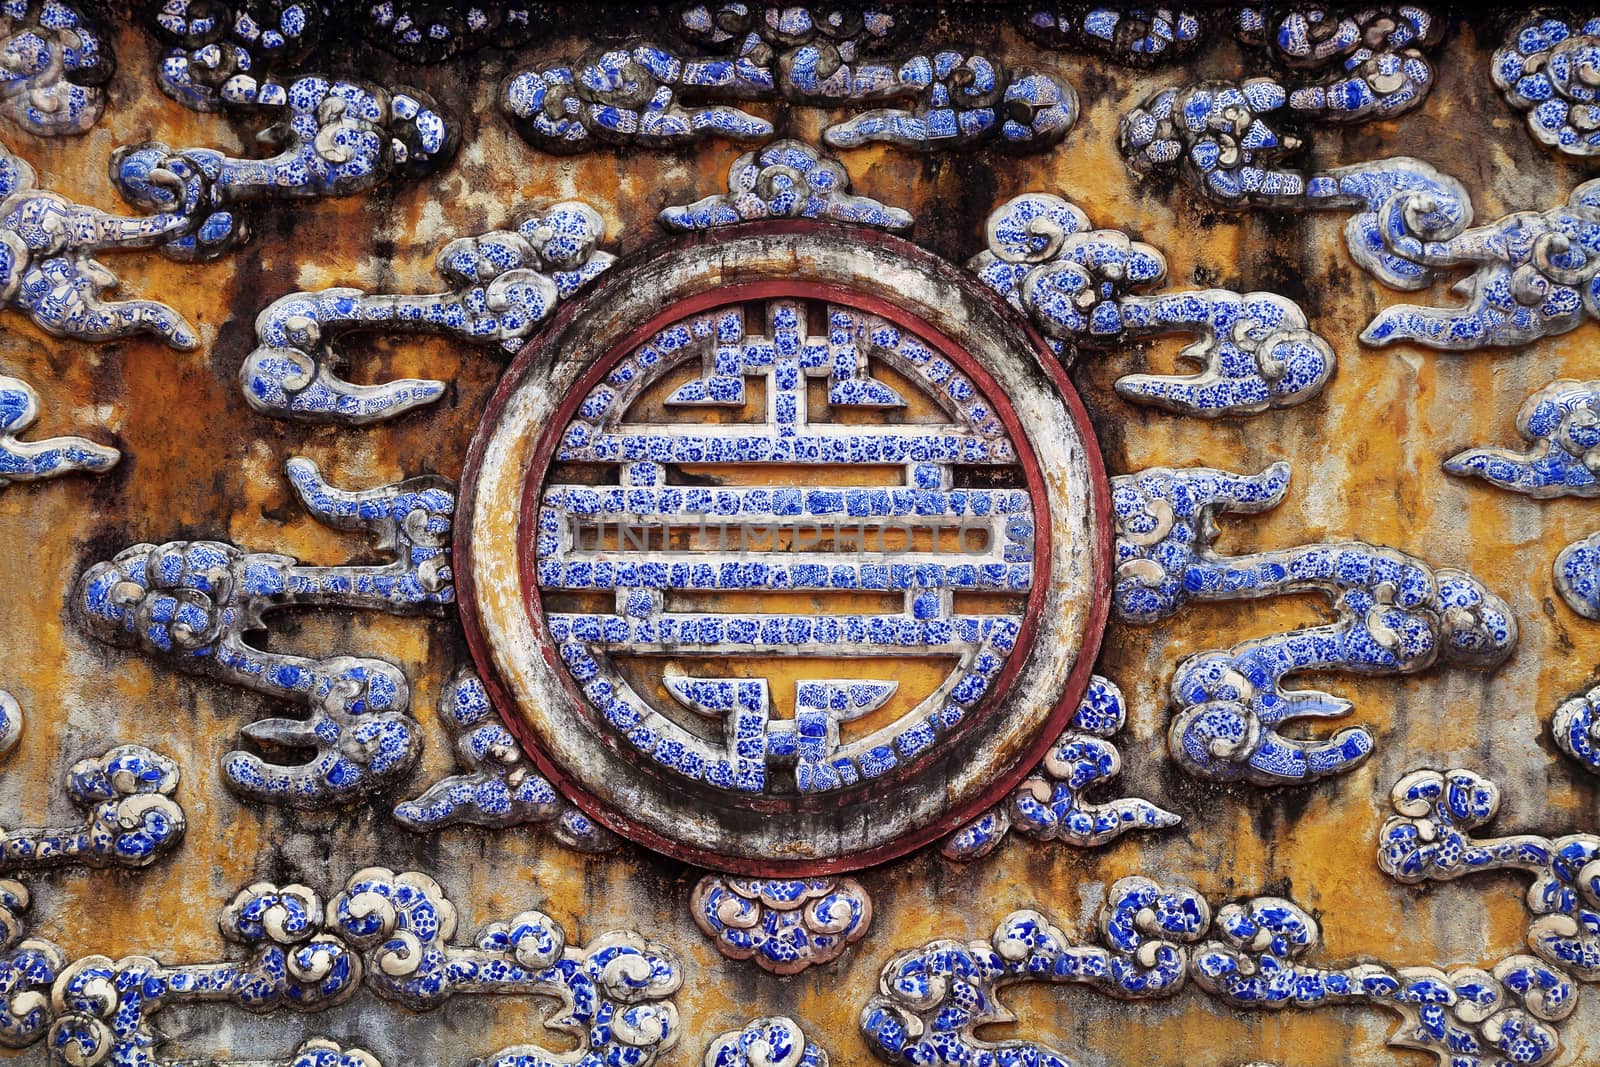 Chinese longevity symbol made of ceramic in Imperial City of Hue, Vietnam